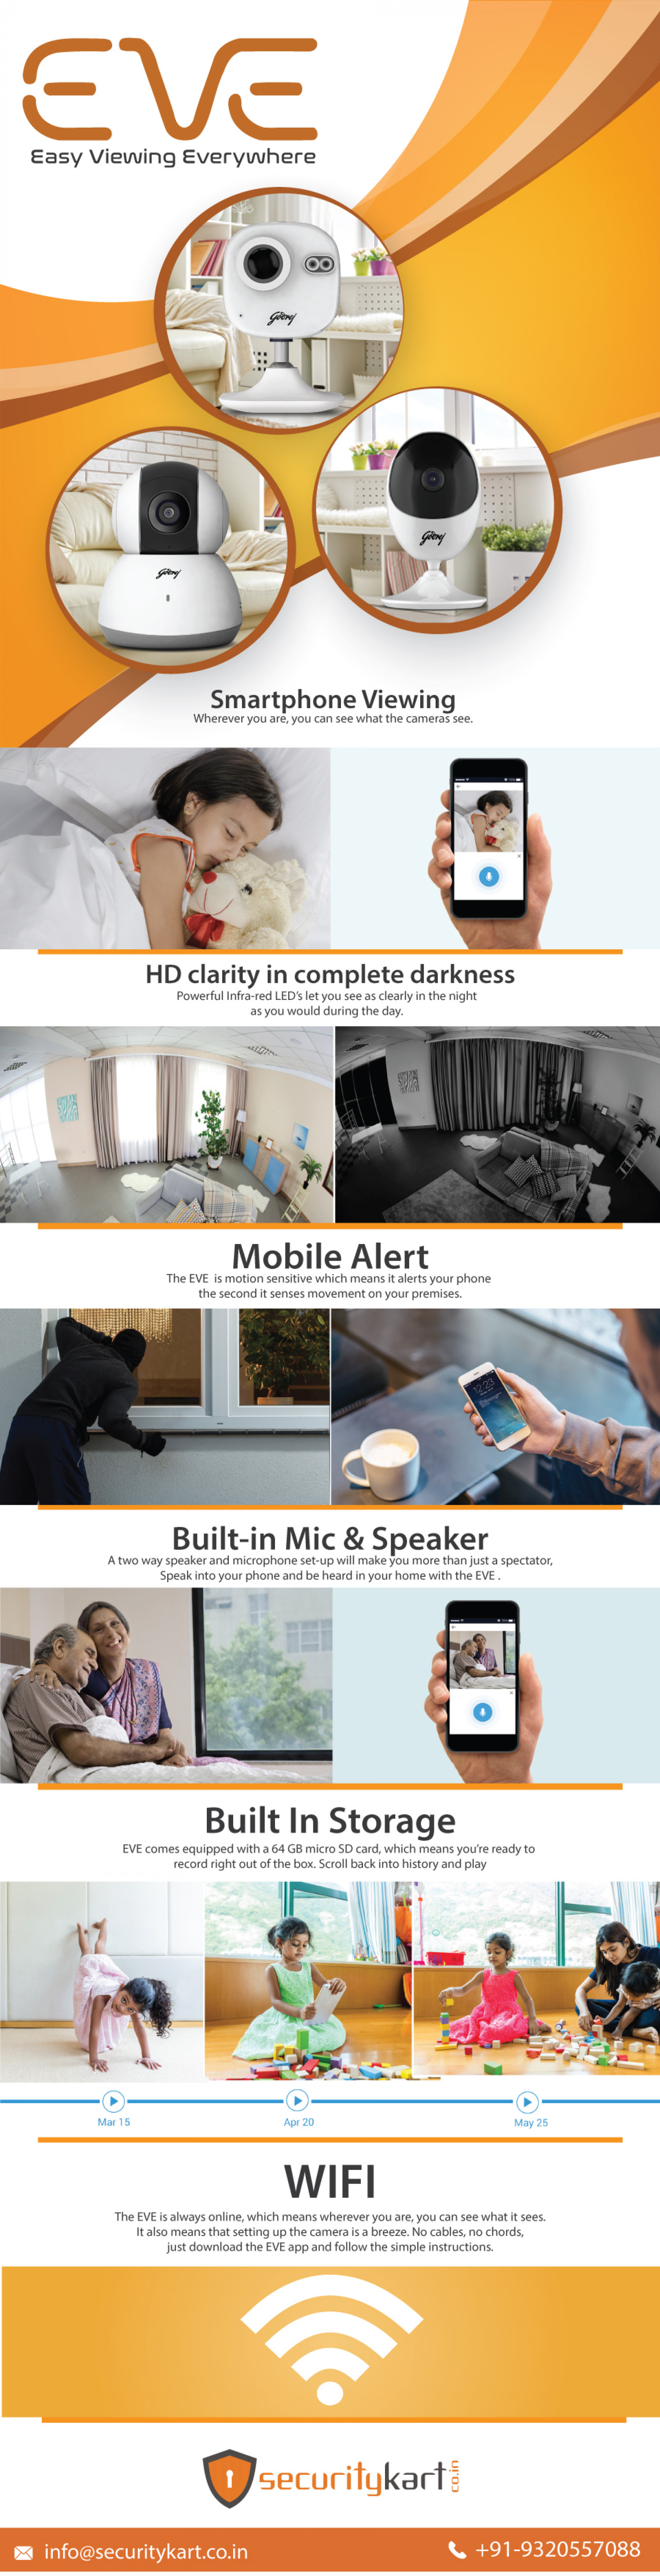 Godrej EVE Wifi Home Cams - Securitykart Infographic